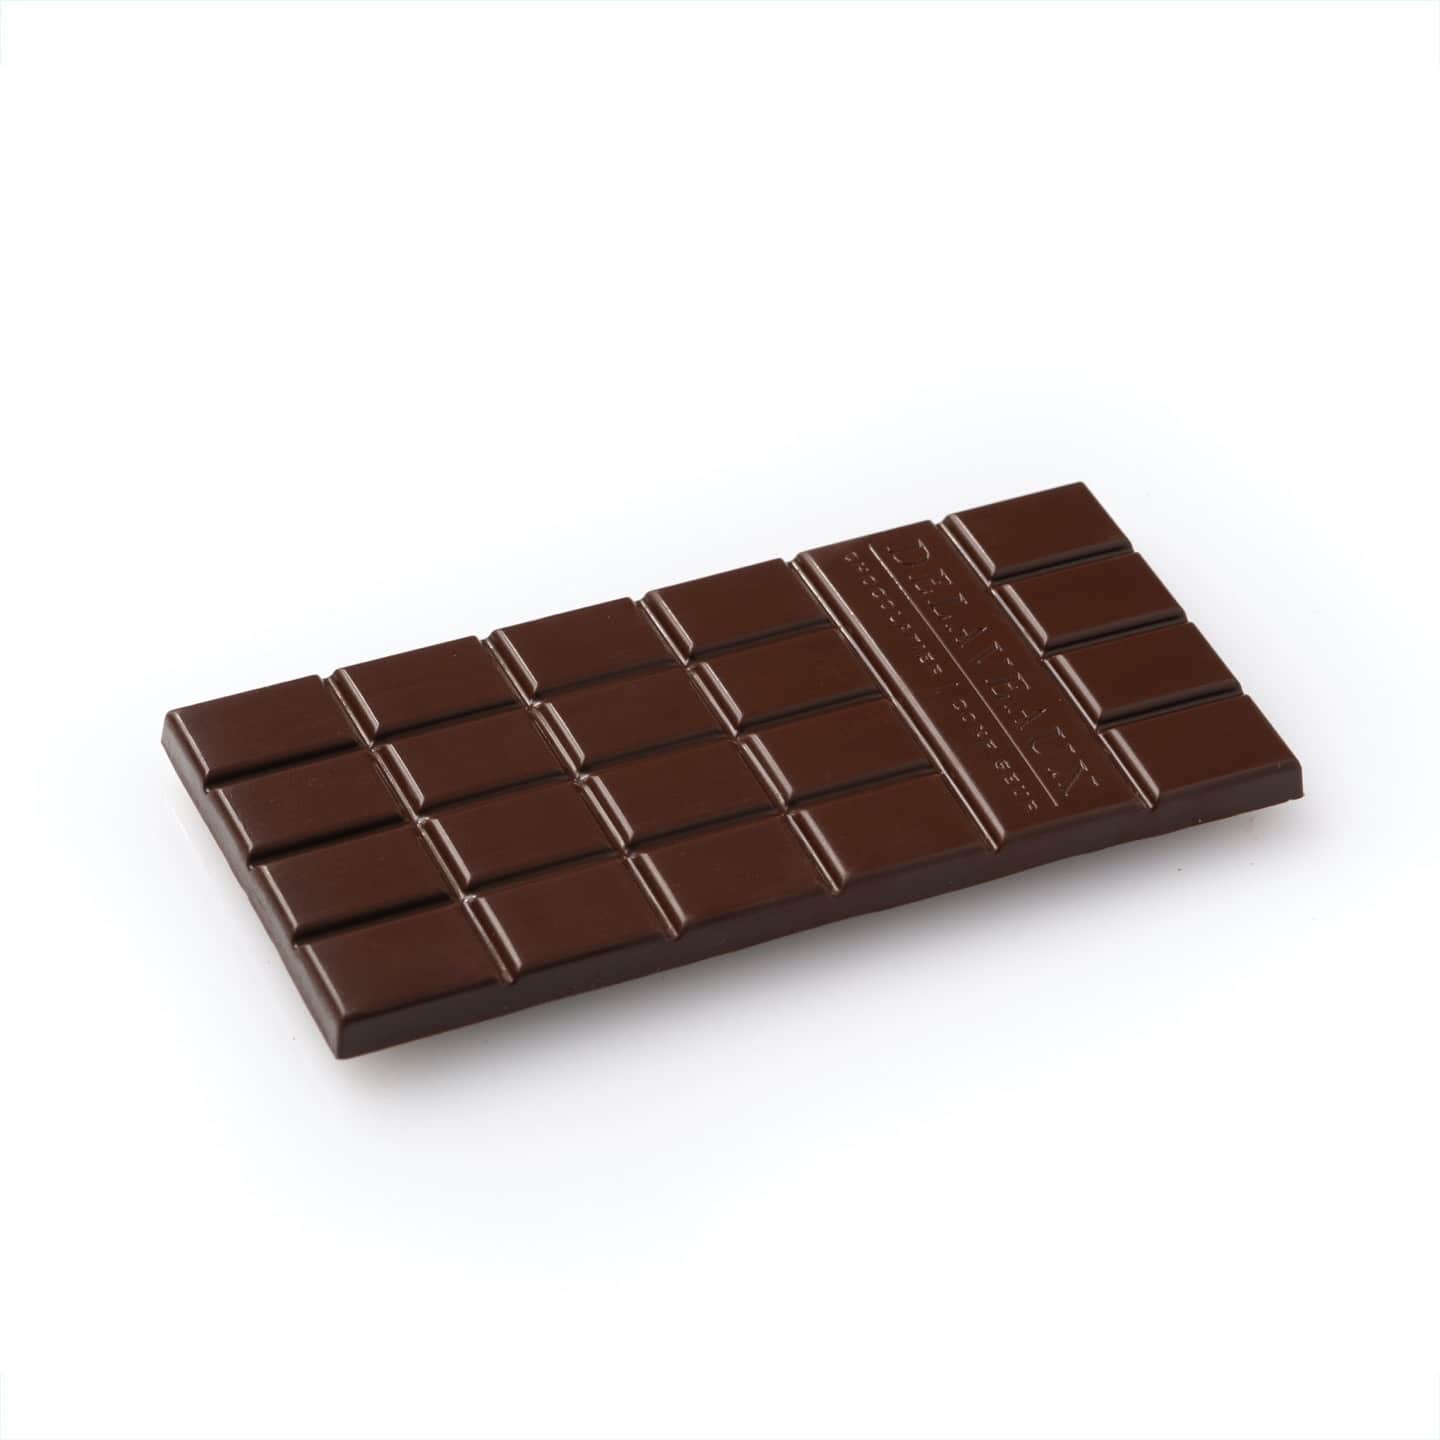 Tablette Chocolat Noir 70% origine Vietnam 80g